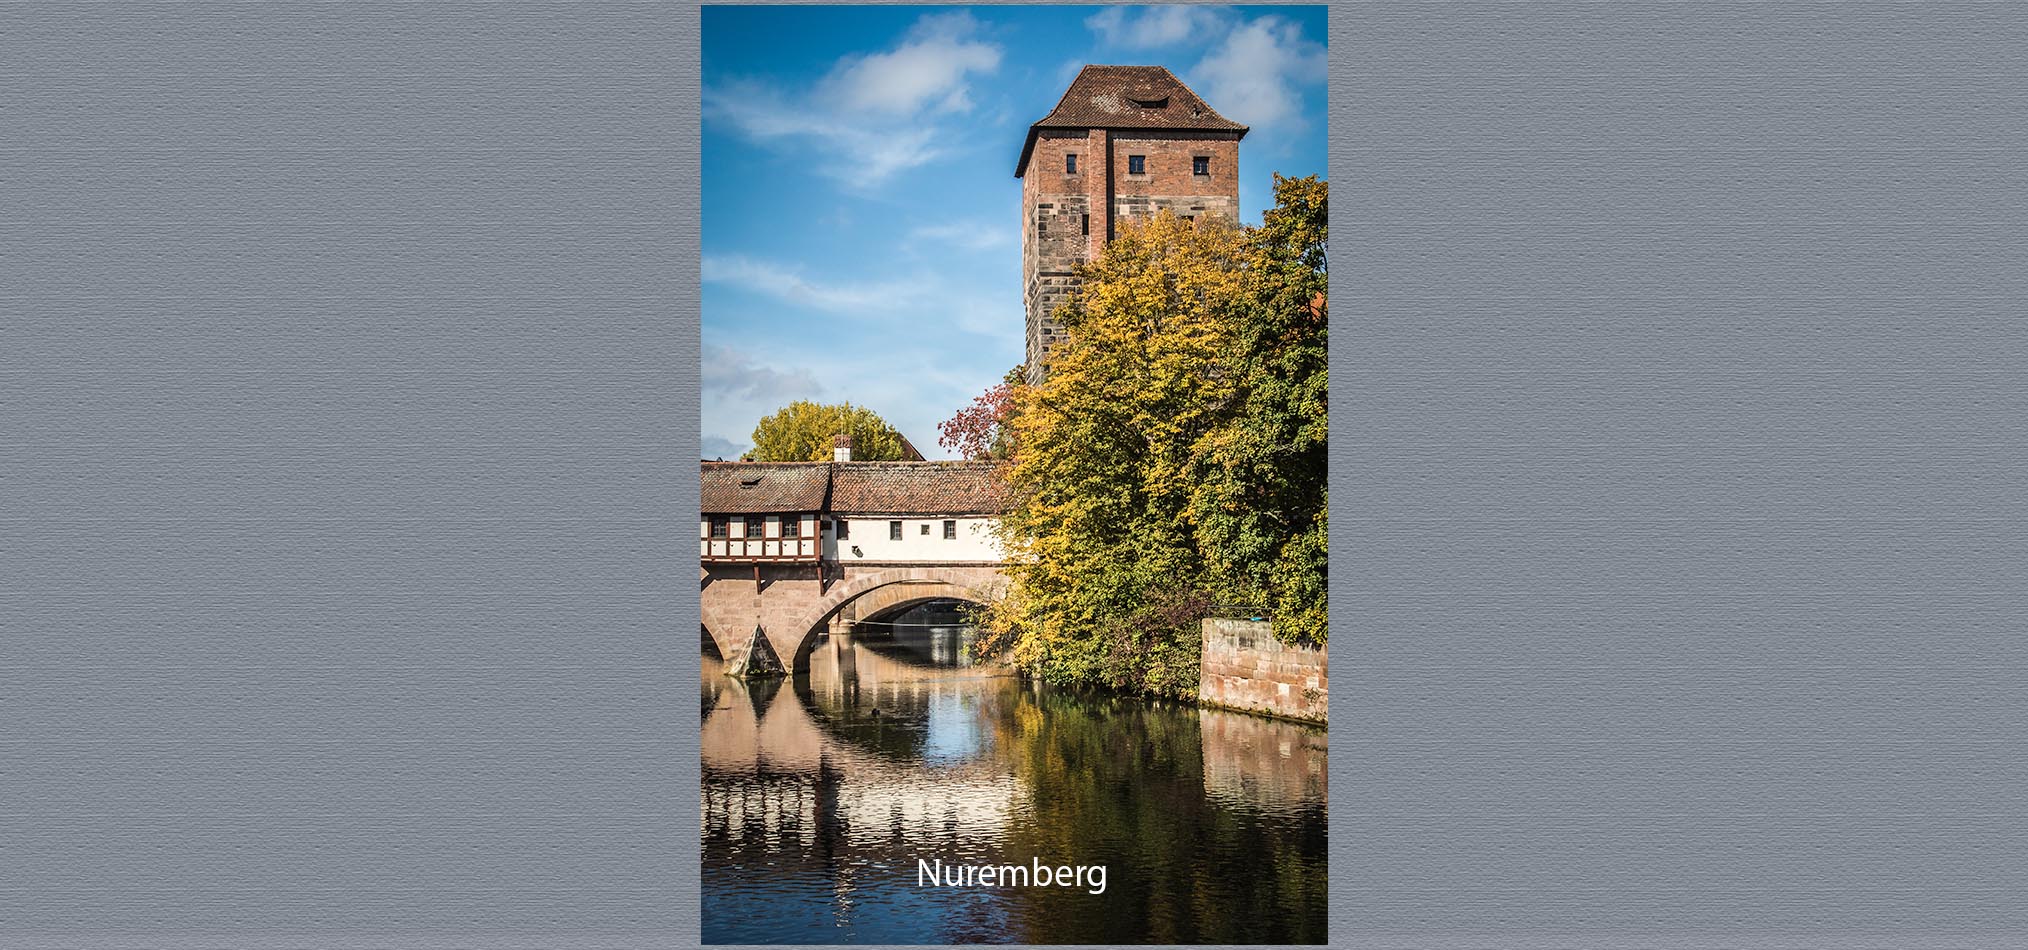 15-10 Nuremberg-43.jpg